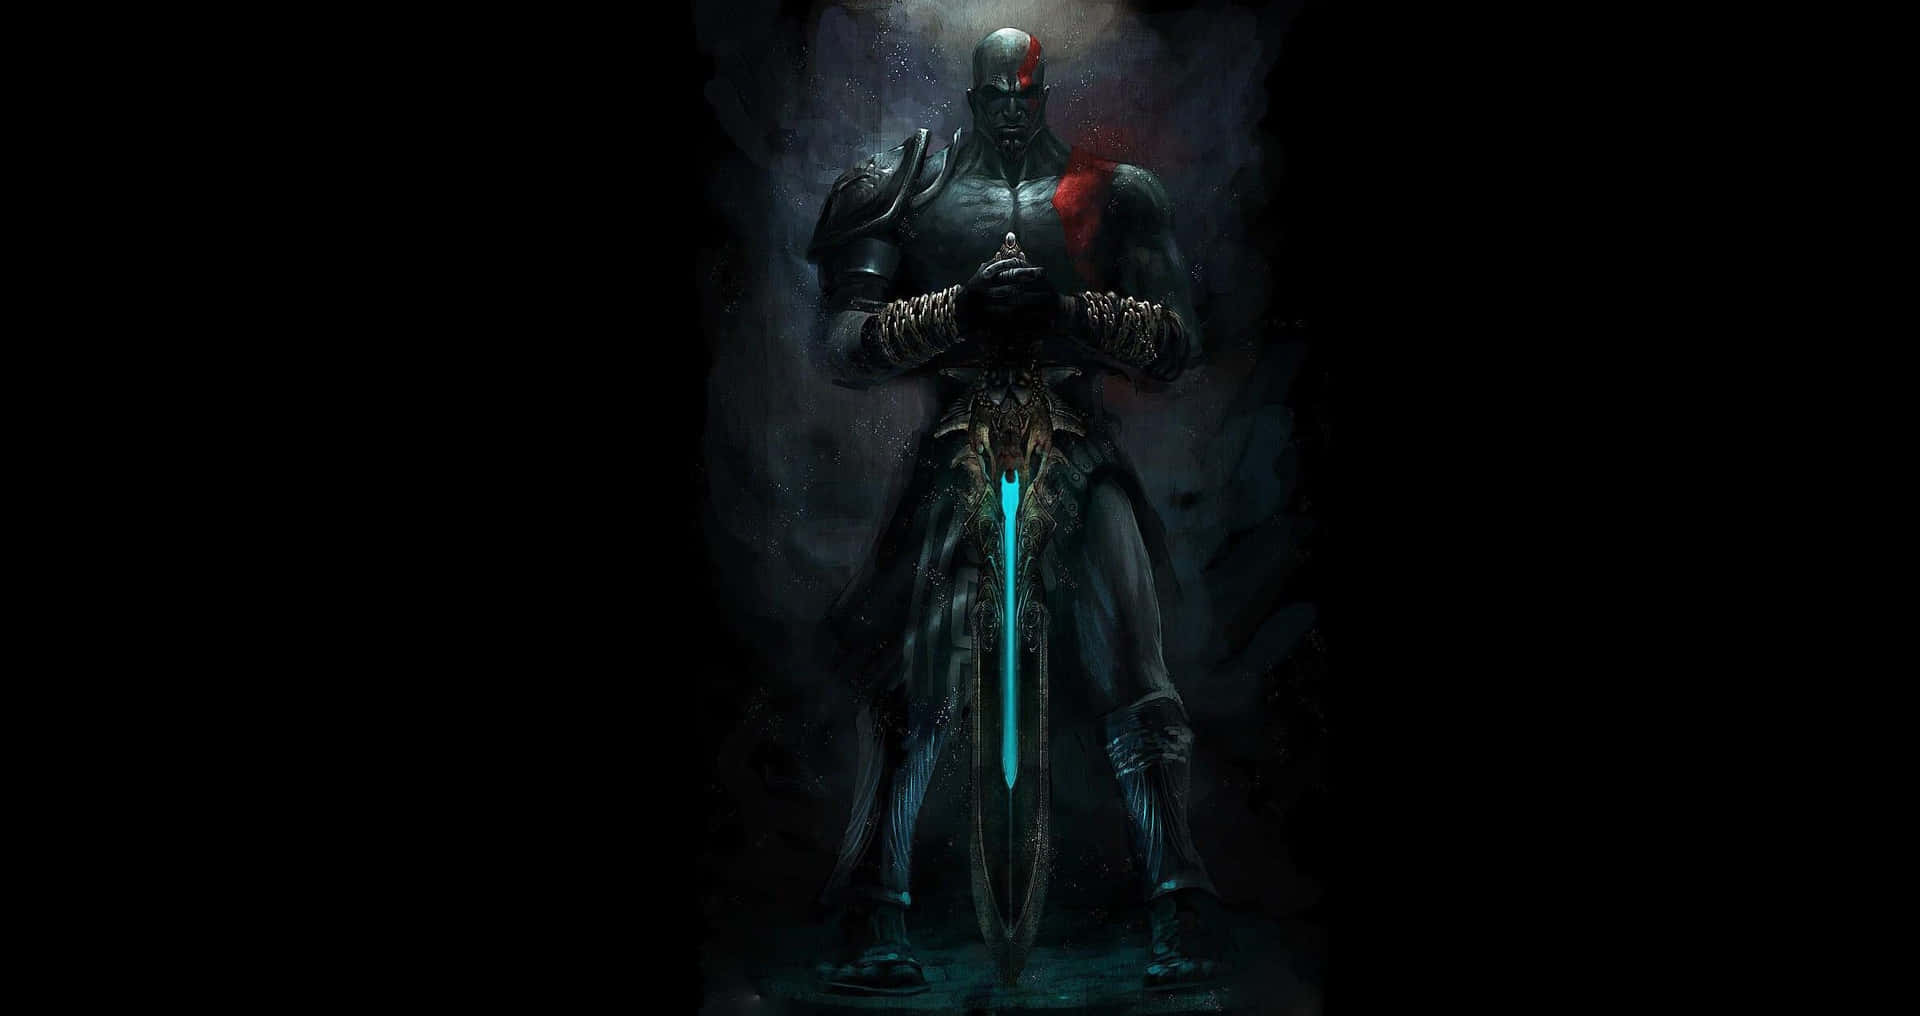 Kratos fights formidable enemies in thrilling battles in God of War III Wallpaper